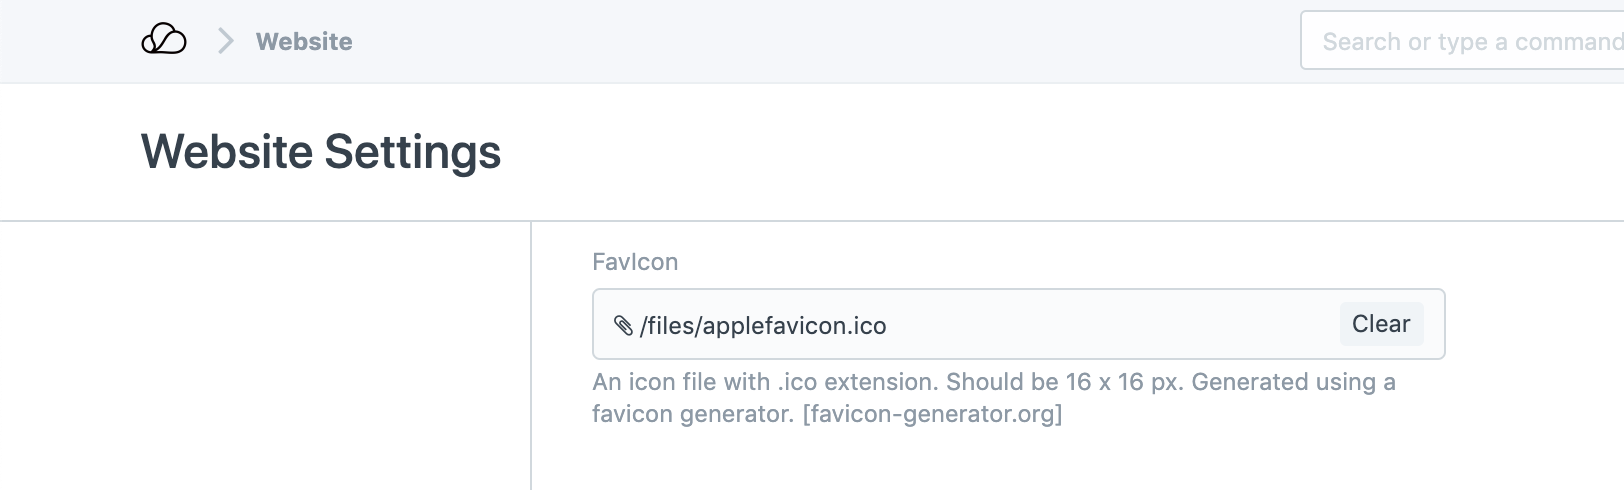 Website Settings - Favicon